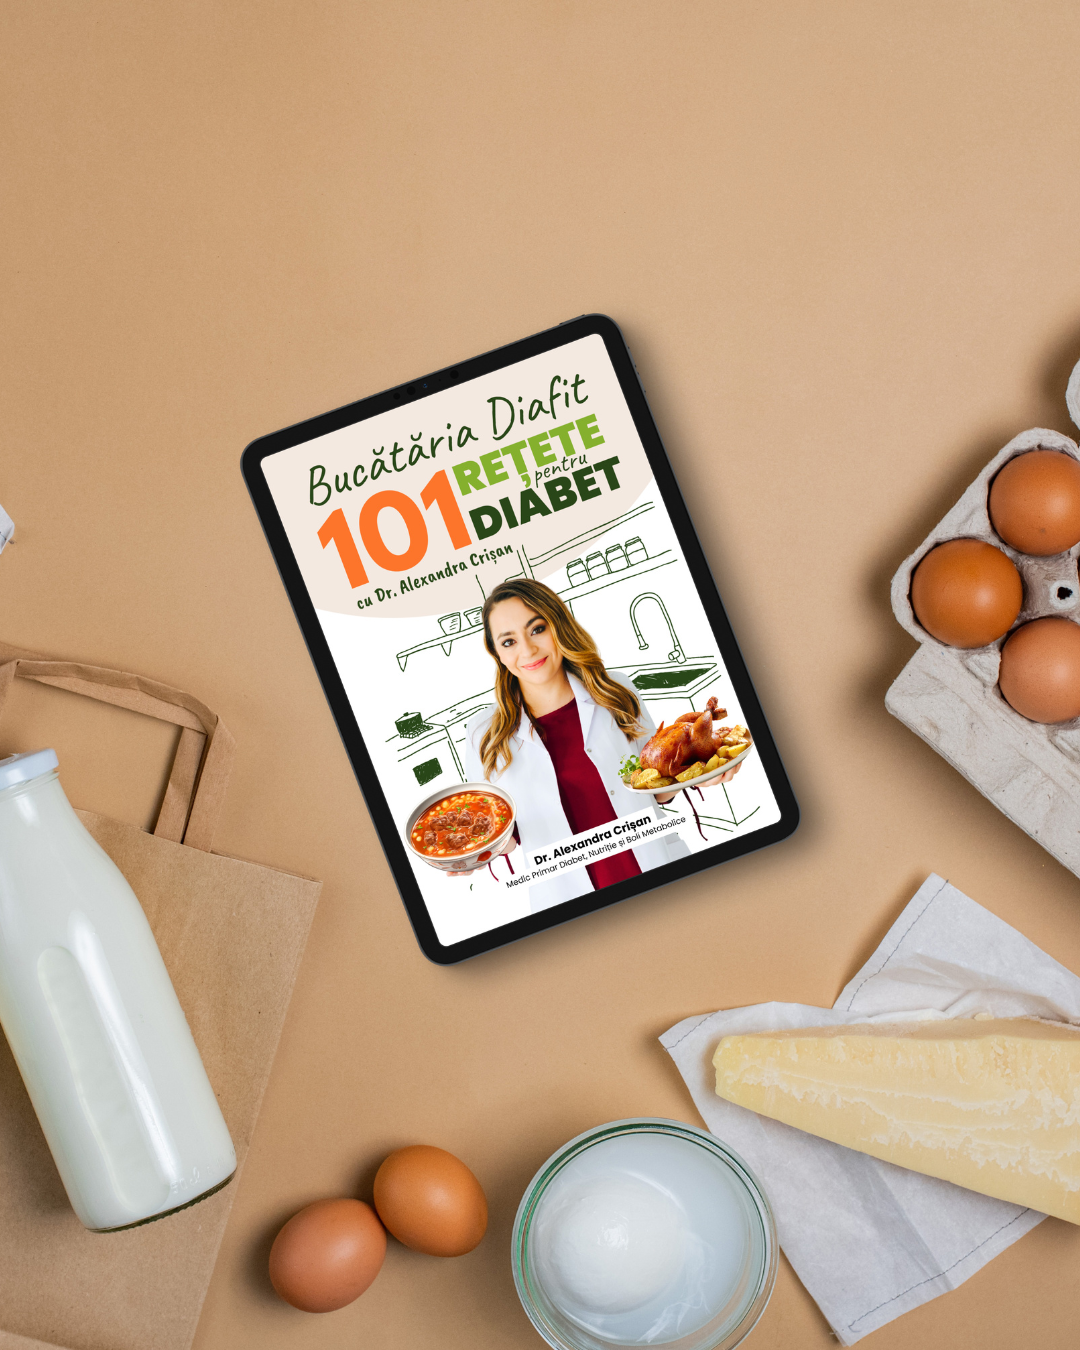 Plan Alimentar Diabet Gestațional + Carte cu 101 Rețete Diabet